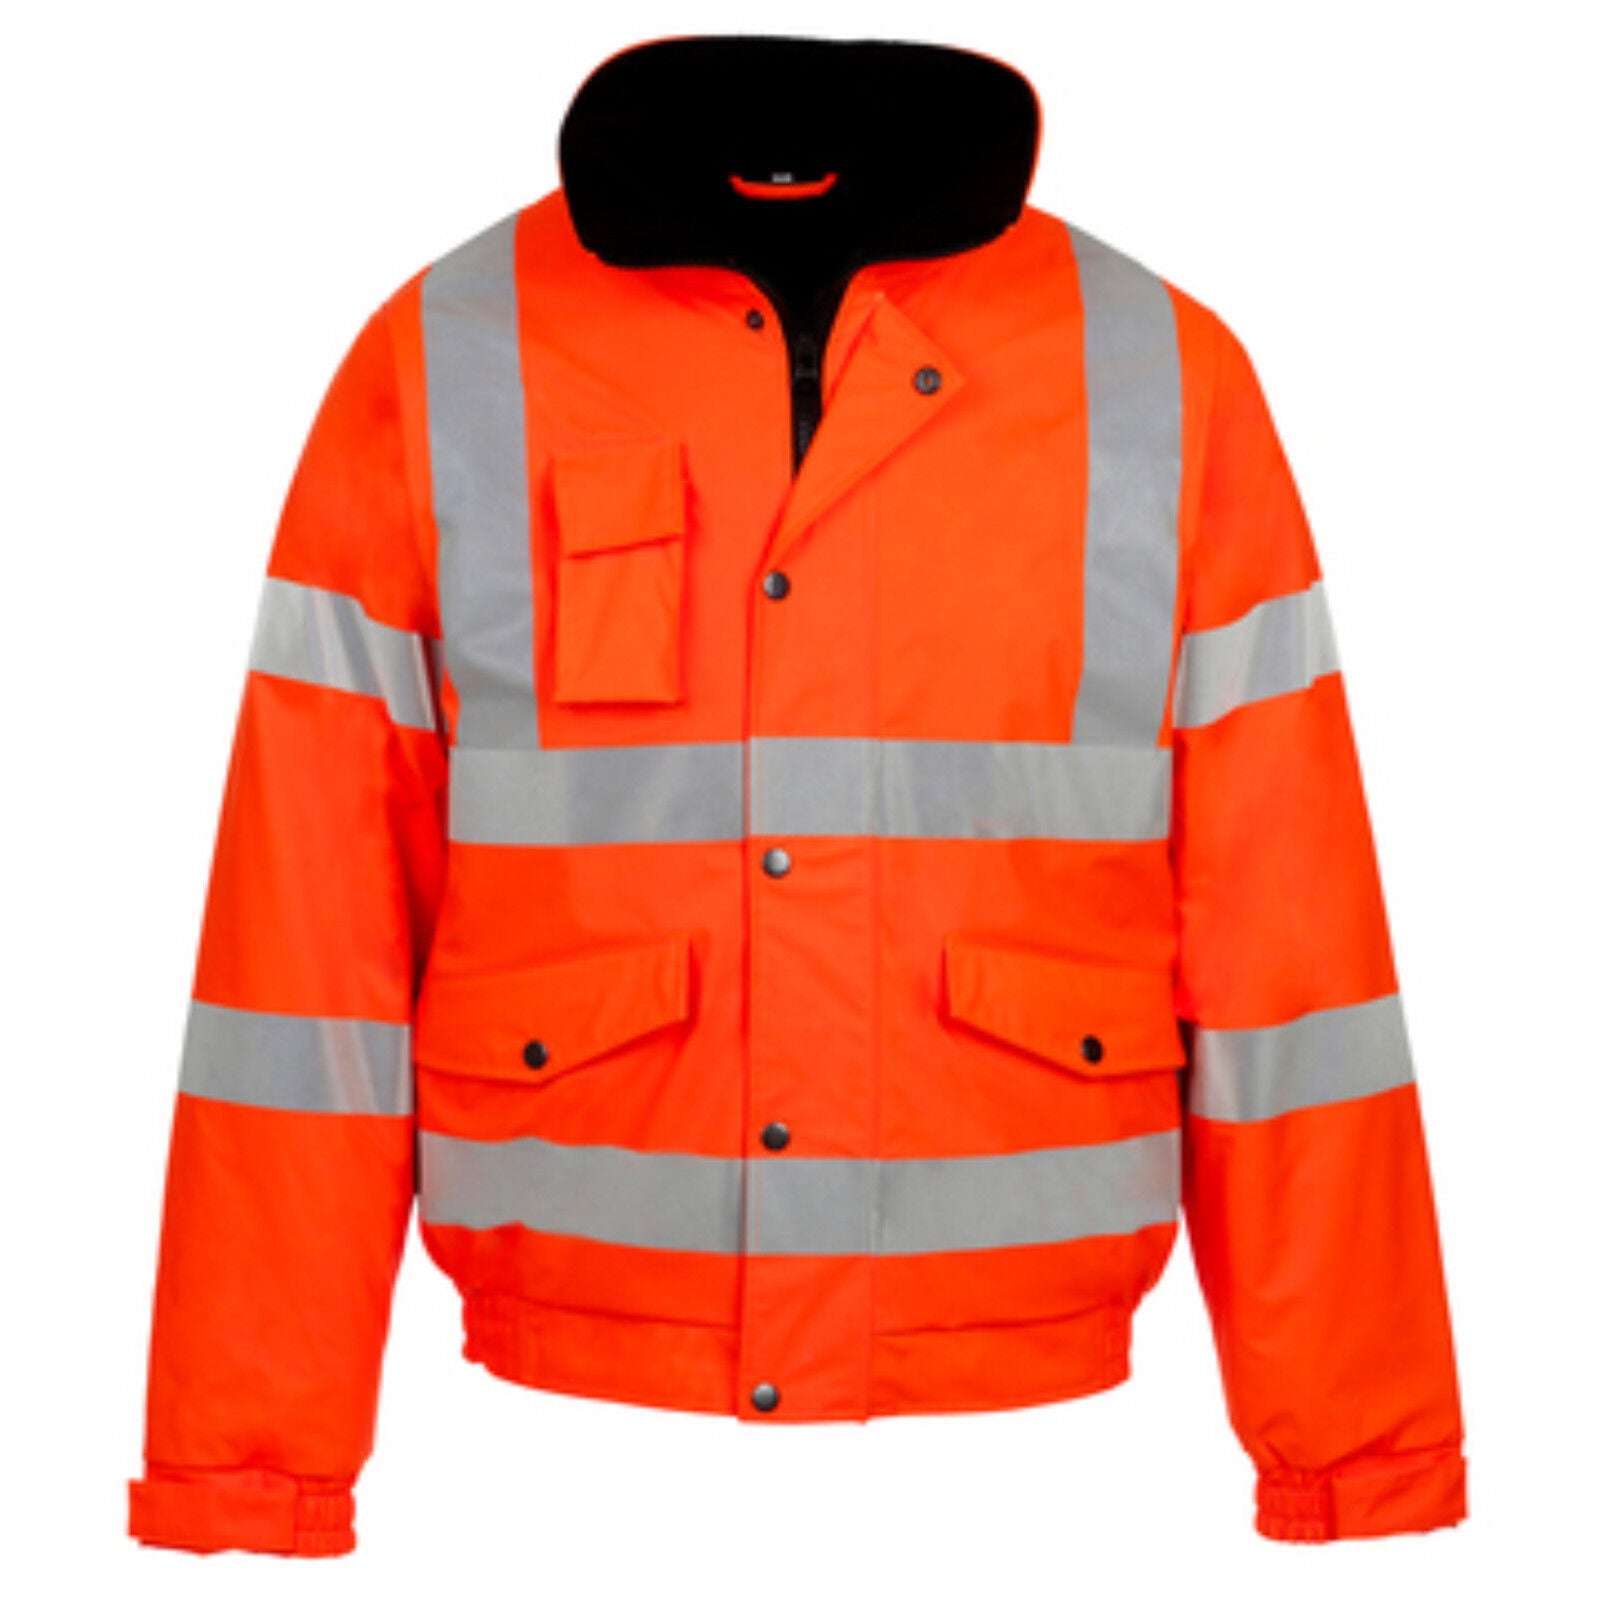 Hi Viz Safety Bomber Jacket Workwear Reflective Waterproof For Construction